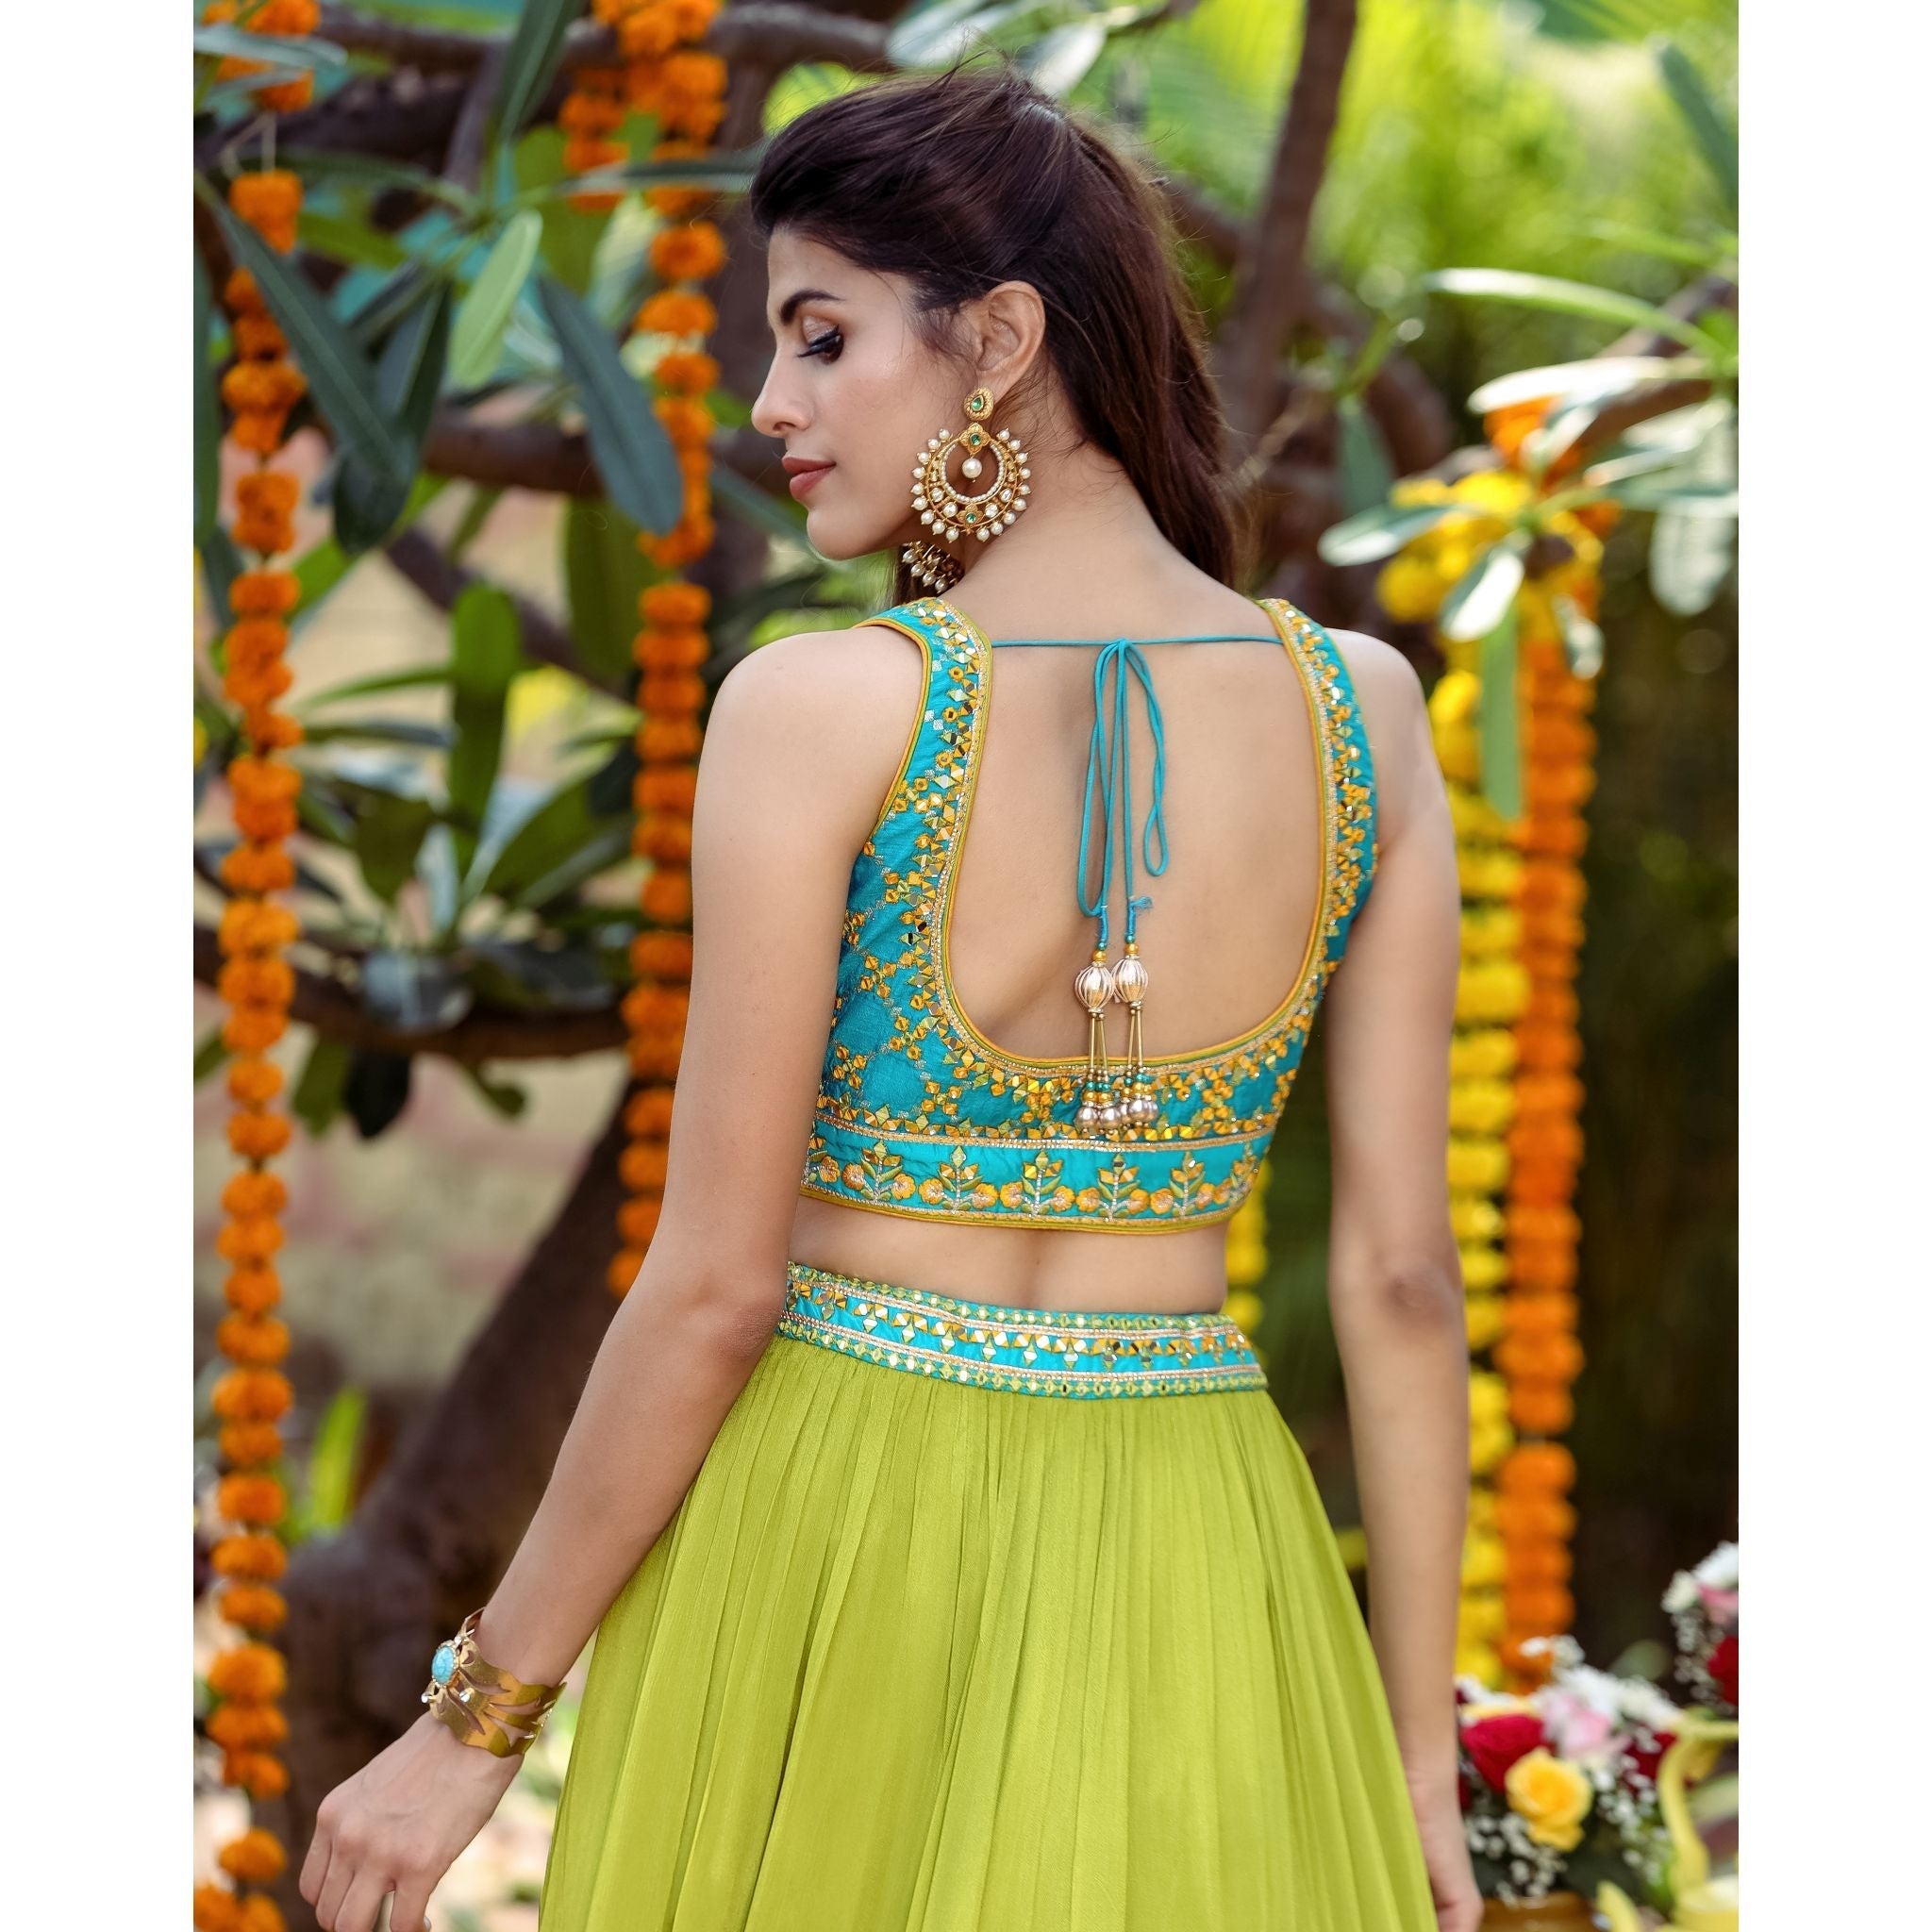 Turquoise And Green Mirrorwork Lehenga Set - Indian Designer Bridal Wedding Outfit